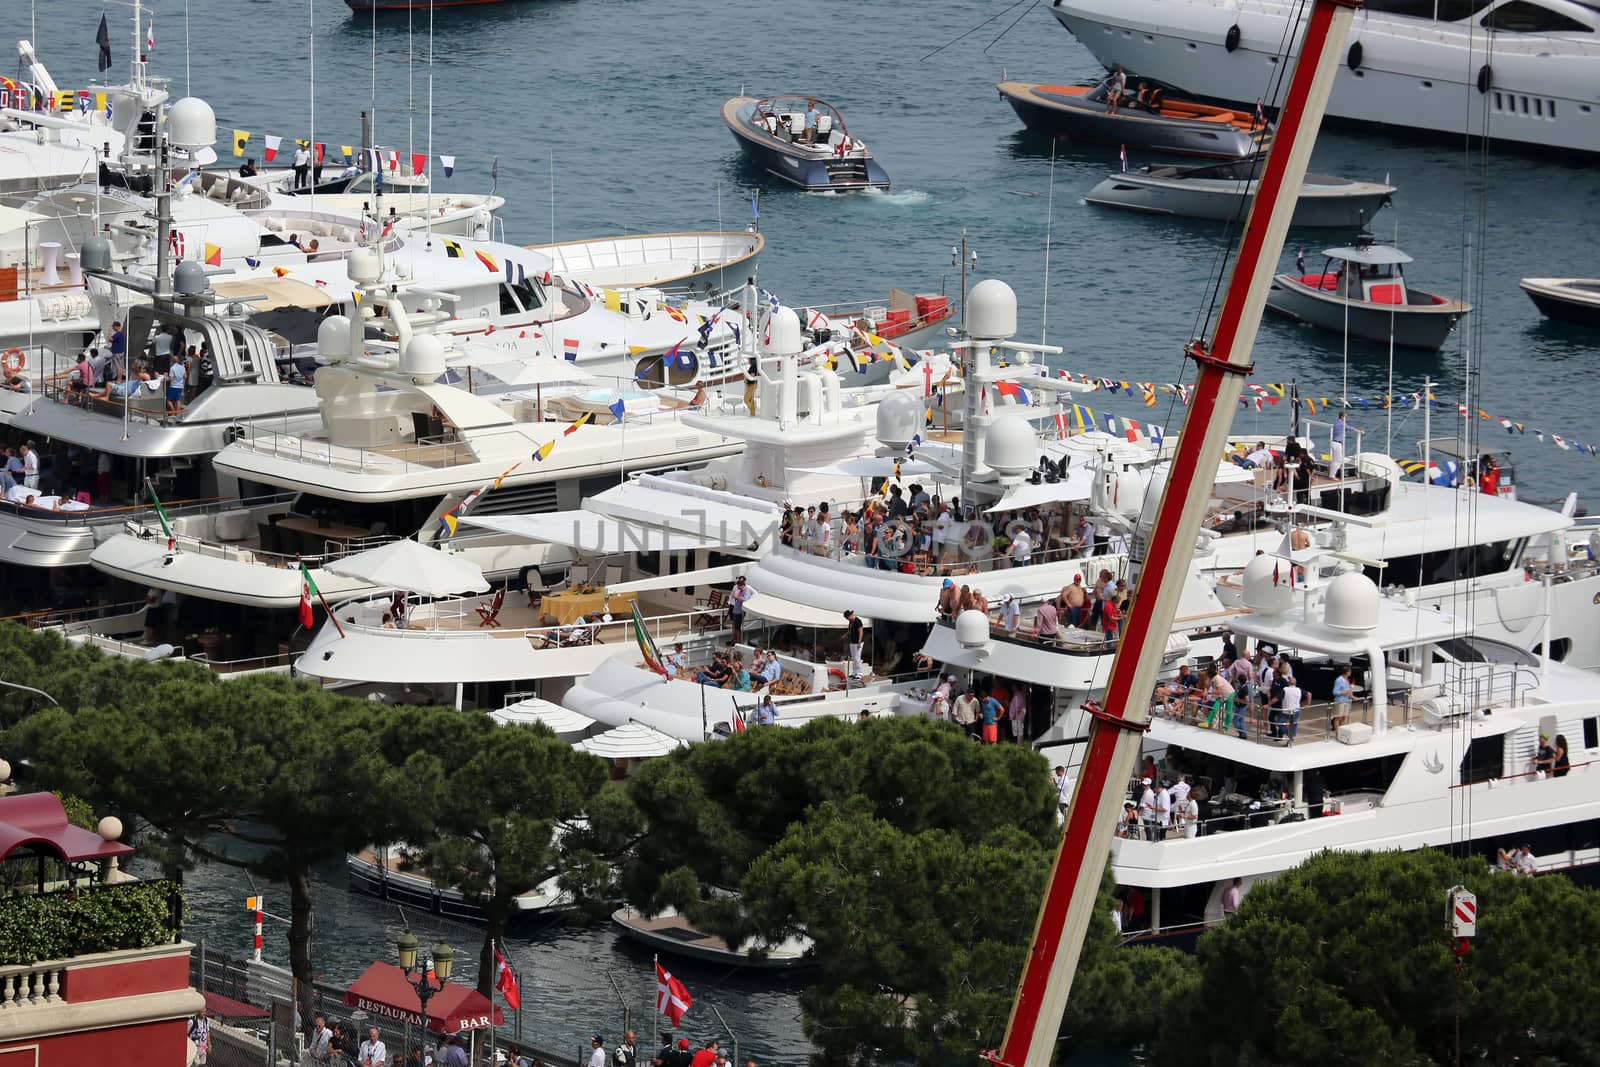 La Condamine, Monaco - May 28, 2016: Luxury Yachts are Parked in the Port Hercule for the Monaco Formula 1 Grand Prix 2016

